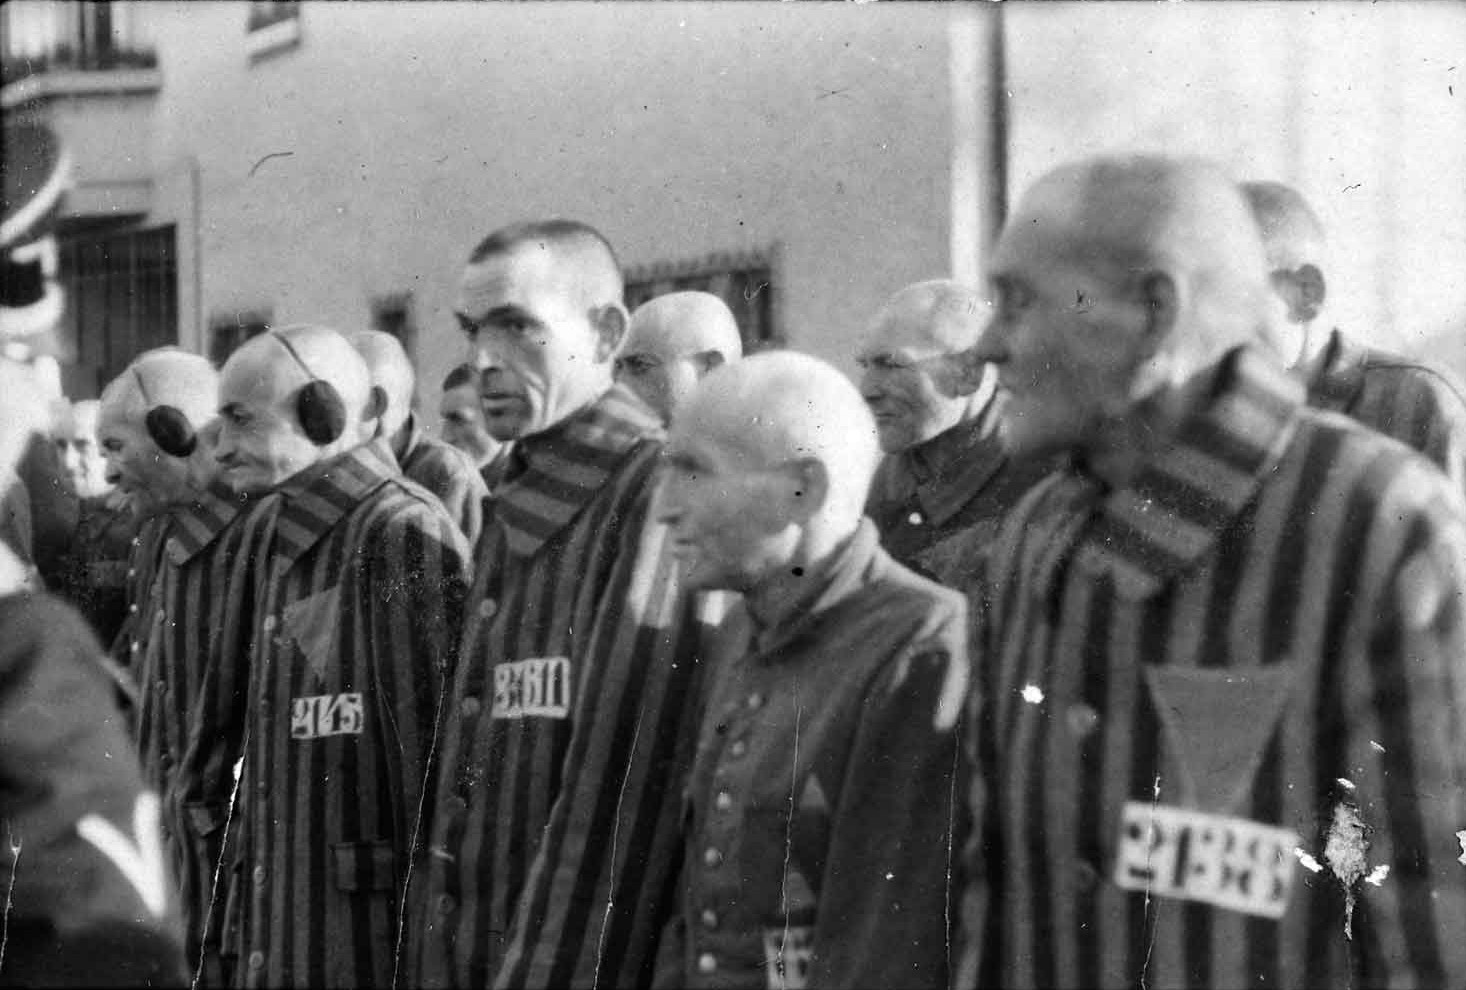 Prisoners at Sachsenhausen Concentration Camp, Germany, 19 Dec 1938